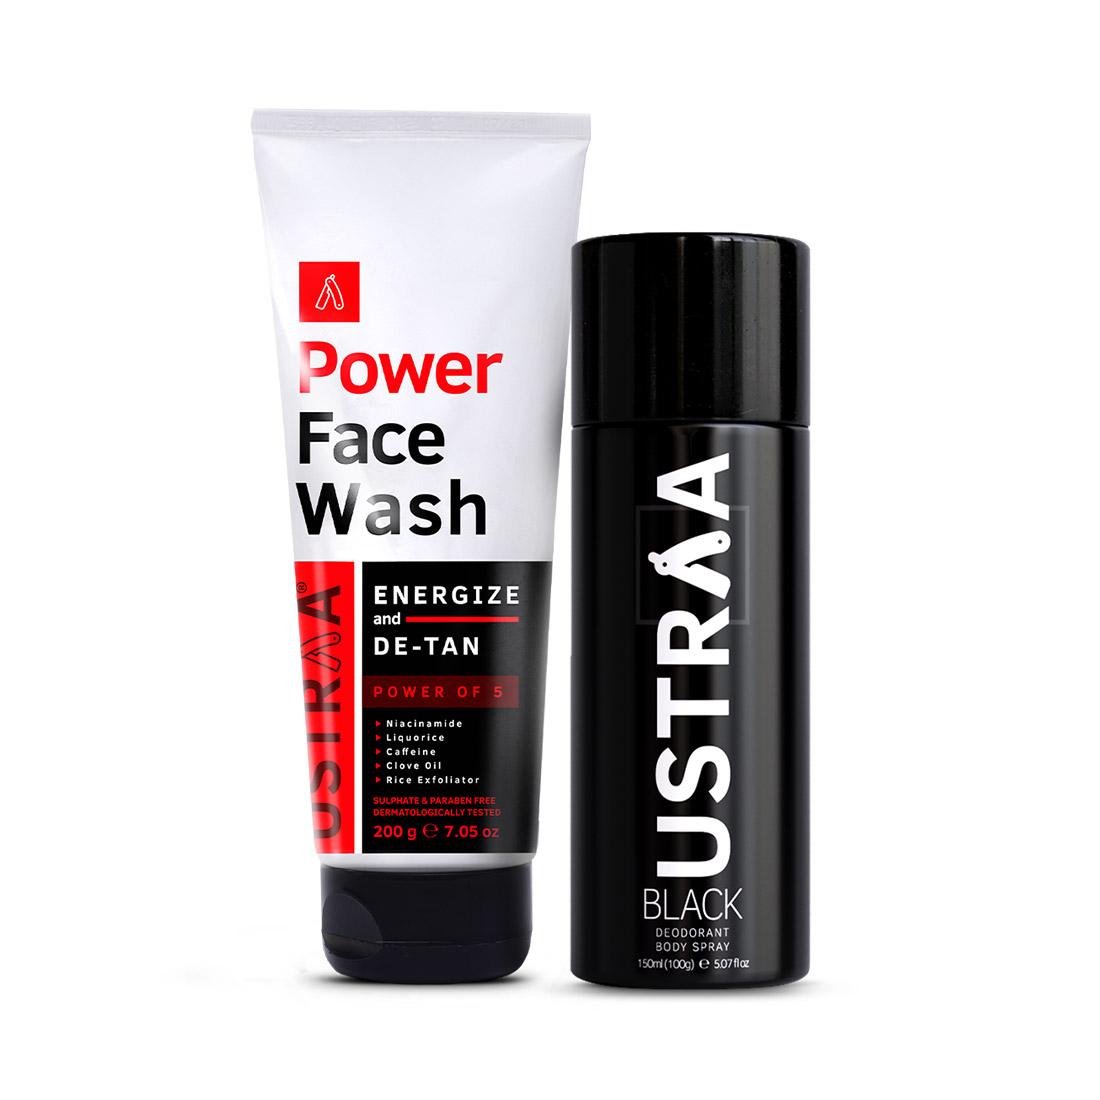 Power Face Wash Energize & BLACK Deodorant Body Spray